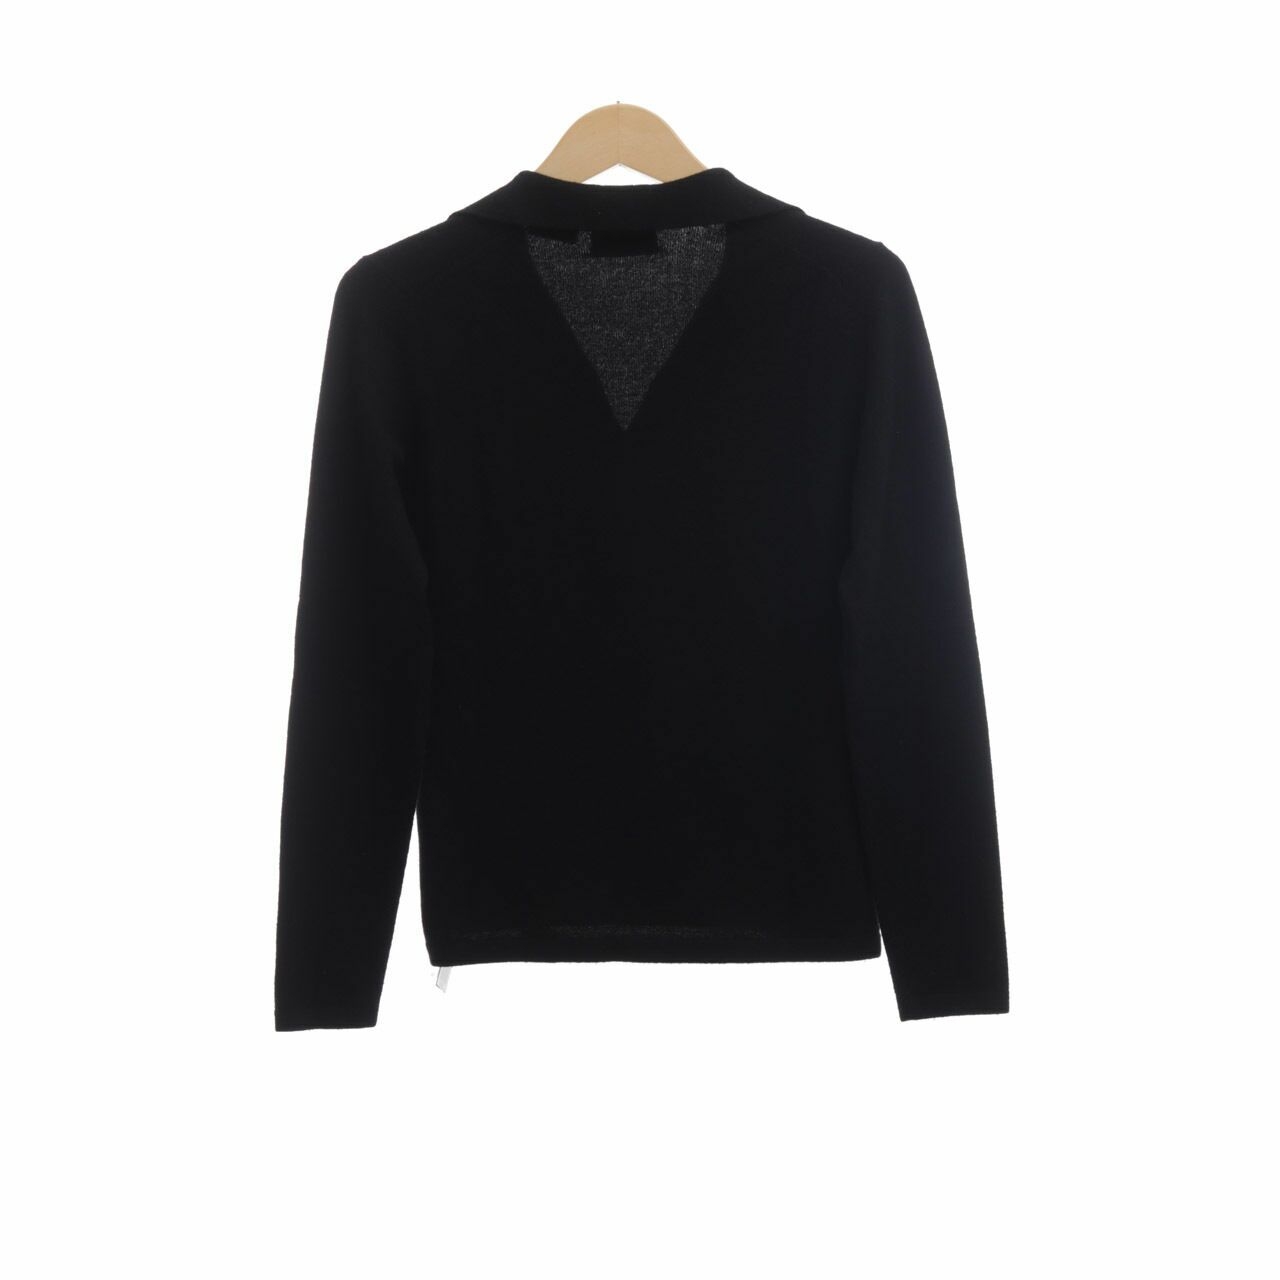  Neiman Marcus Cashmere Black Sweater